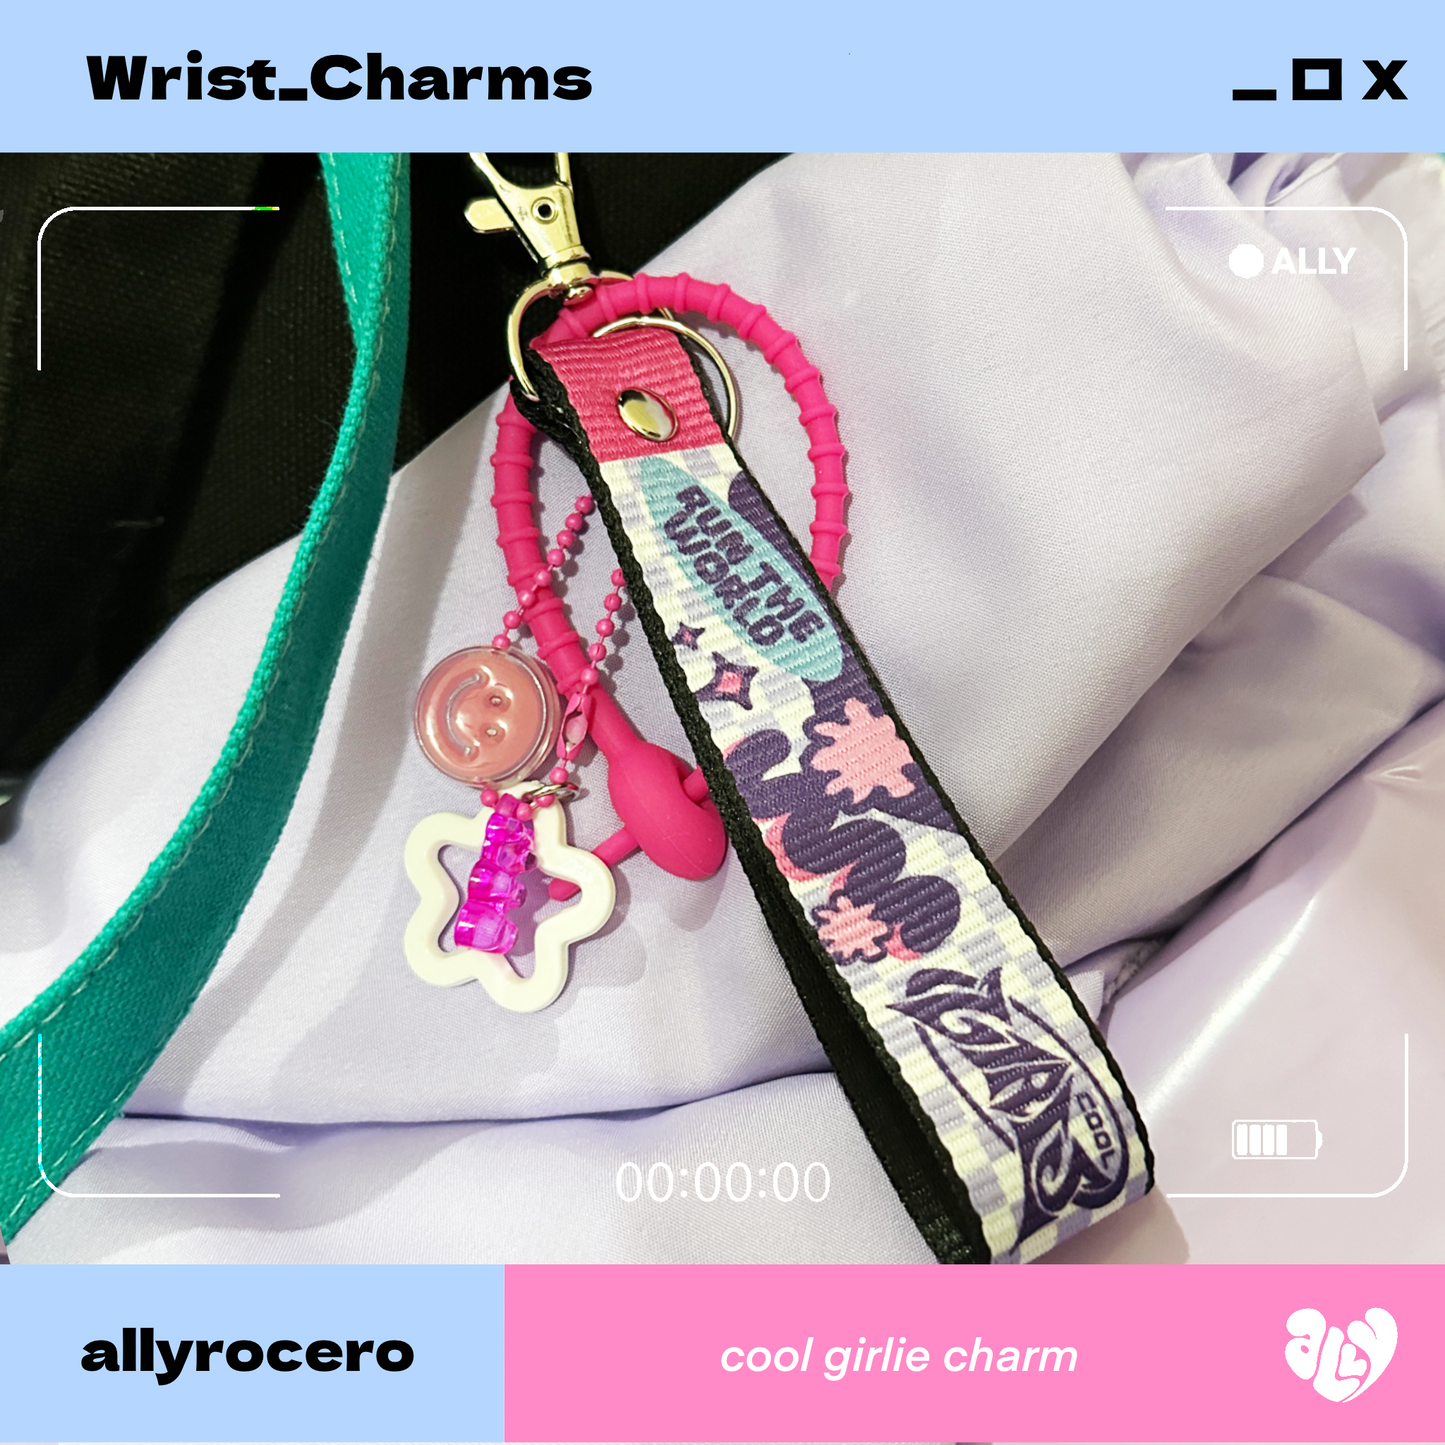 ALLYRCR - Cool Girlie Wrist Charm